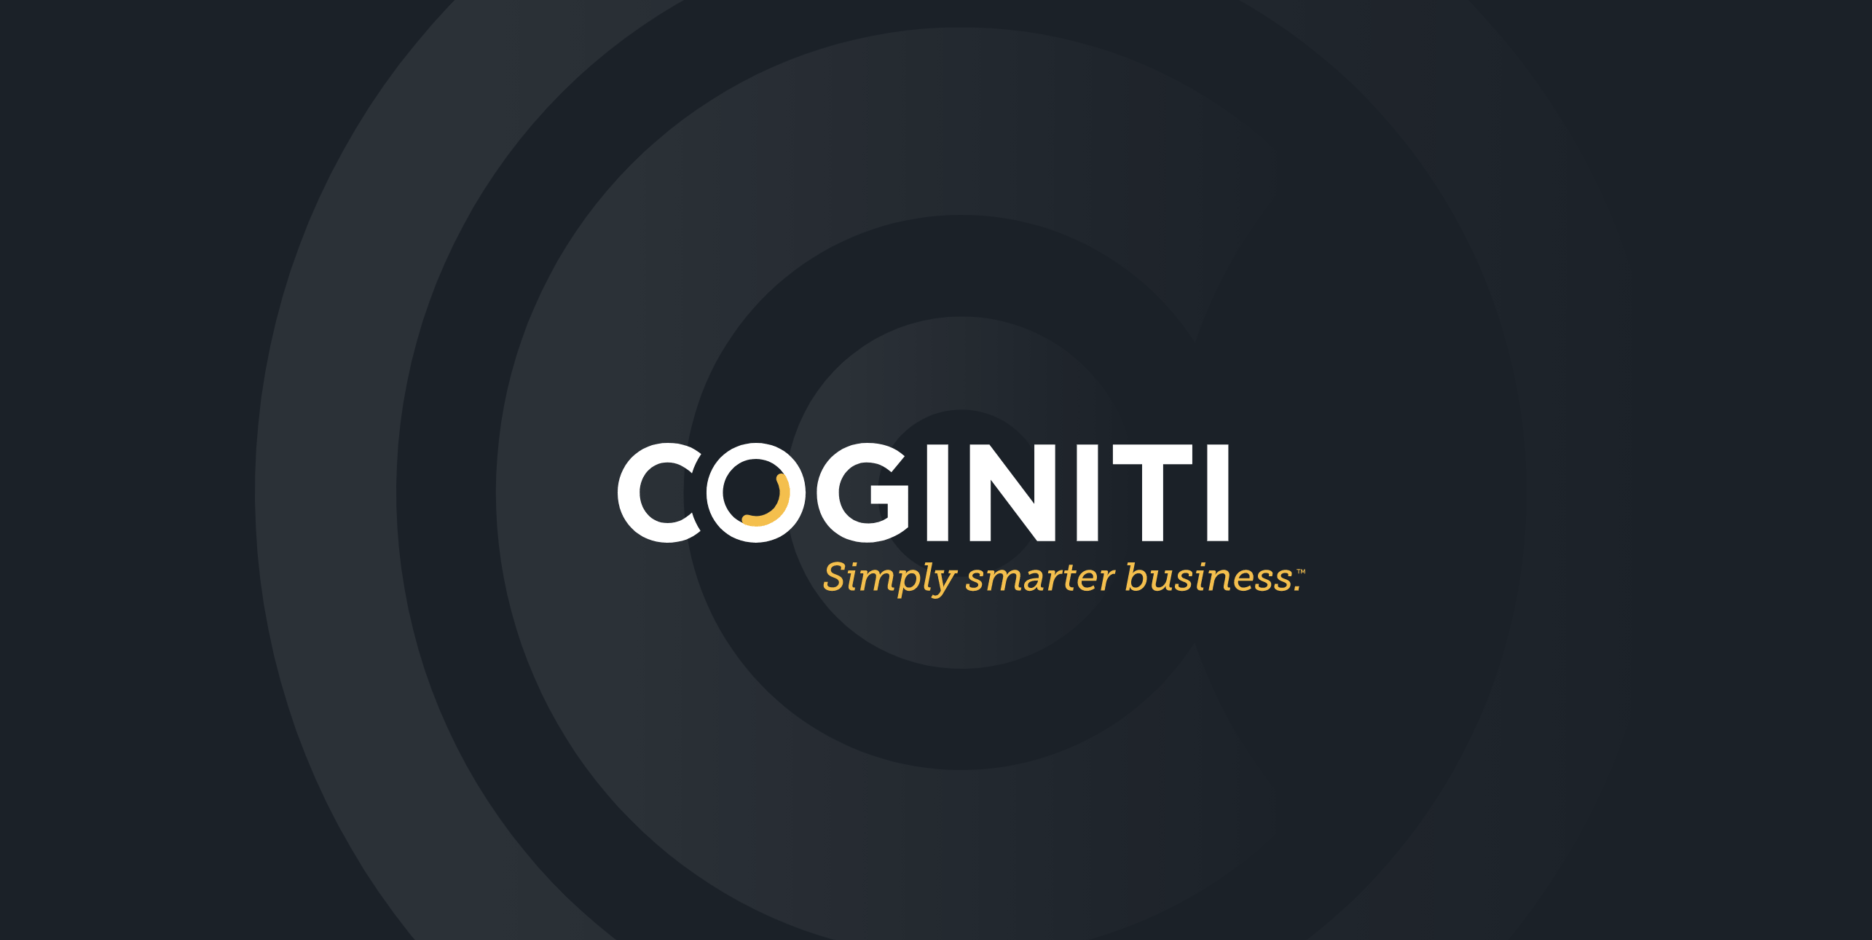 Coginiti simply smarter business